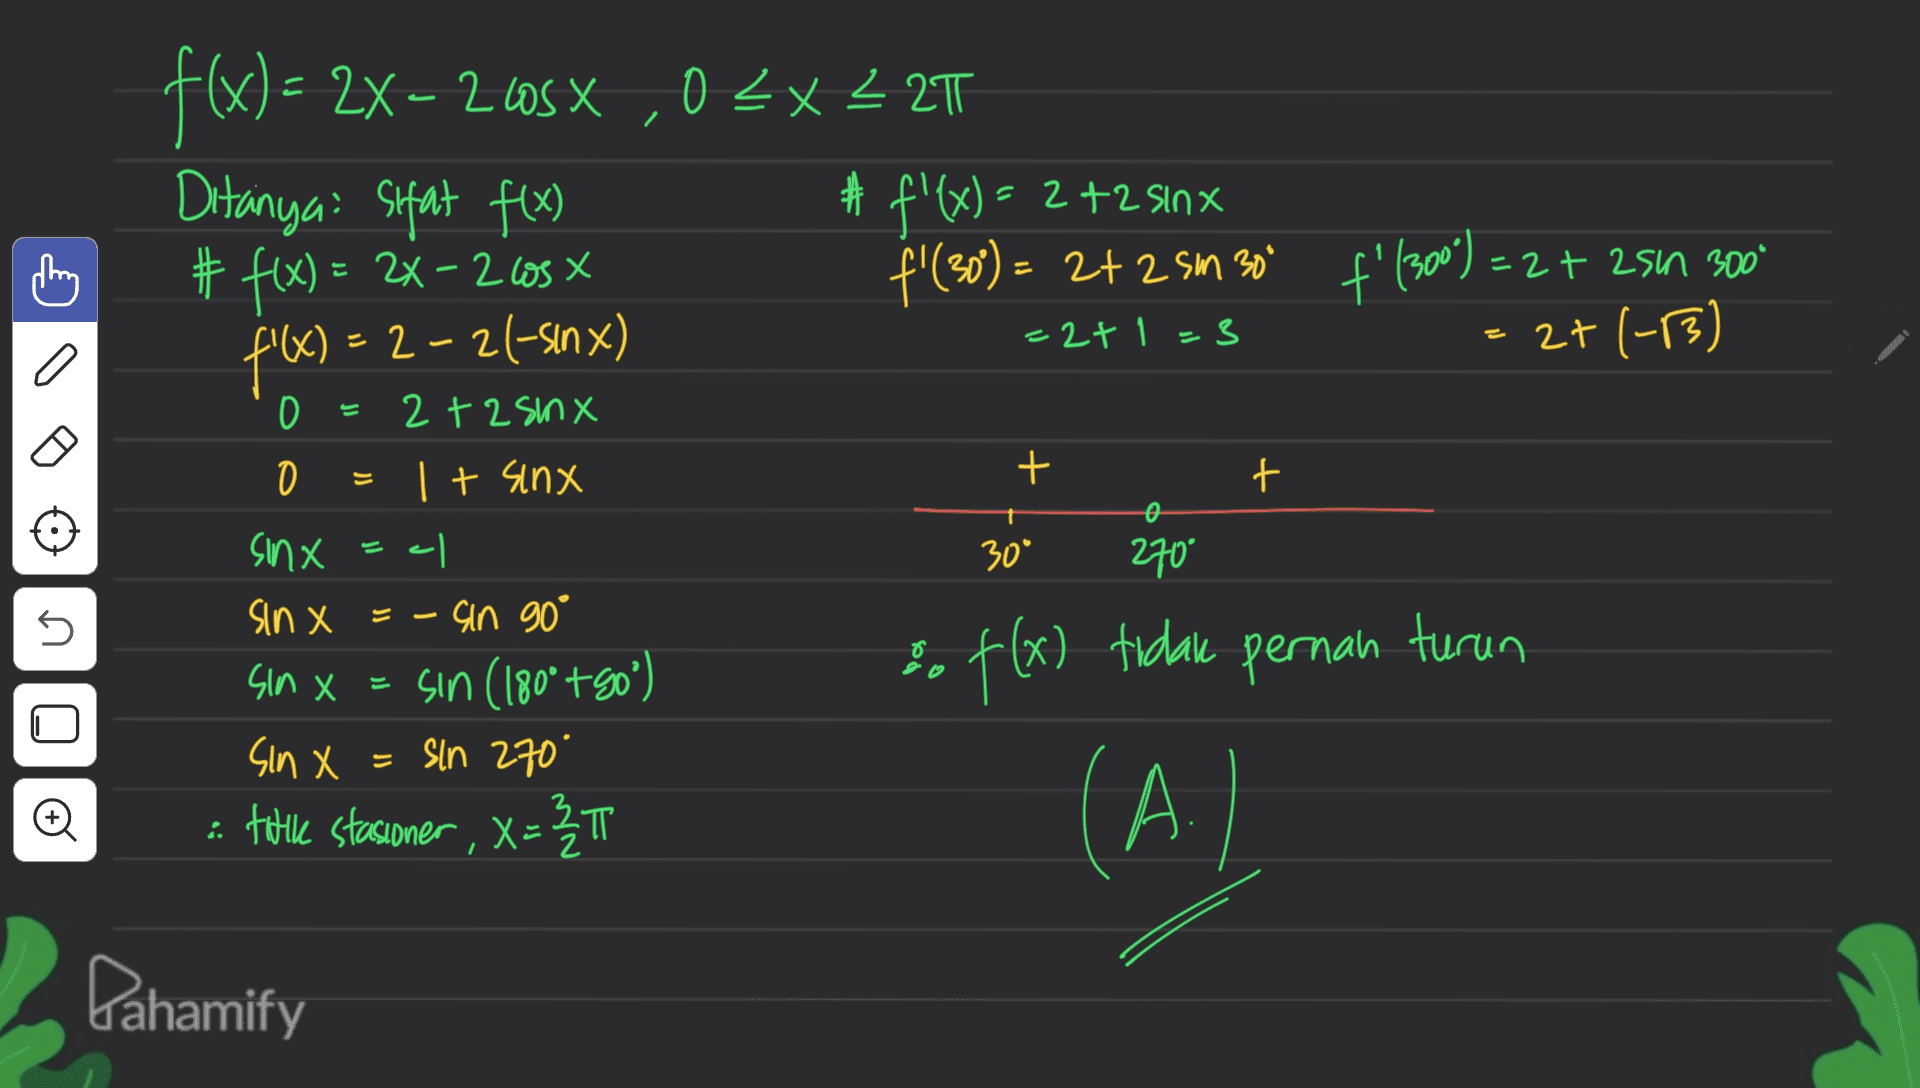 2 : =2+ zsin 300° -2+1=3 I a f'(X) = 2-26-sınx) 0 f(x) = 2X – 2.60 ,03X – 21 = -2 < Ditanyai sifat f(x) 井 #f'(x) = 2 +2 sinx # f(x) = 2x – 210s -2 los f'(30) = 2+2 Sm 300 f'(300) = 2 sm = 2+(-3) 2 +25mx 0 It sinx sinx 270 sin X = - Gin 90° = sin (180° +80°) f(x) tidak pernah turun sin x = sln 270" ° e tuile stasioner , X = 3 1 : X < А. + + 0 30* 5 Sin X X (A) TT Pahamify 